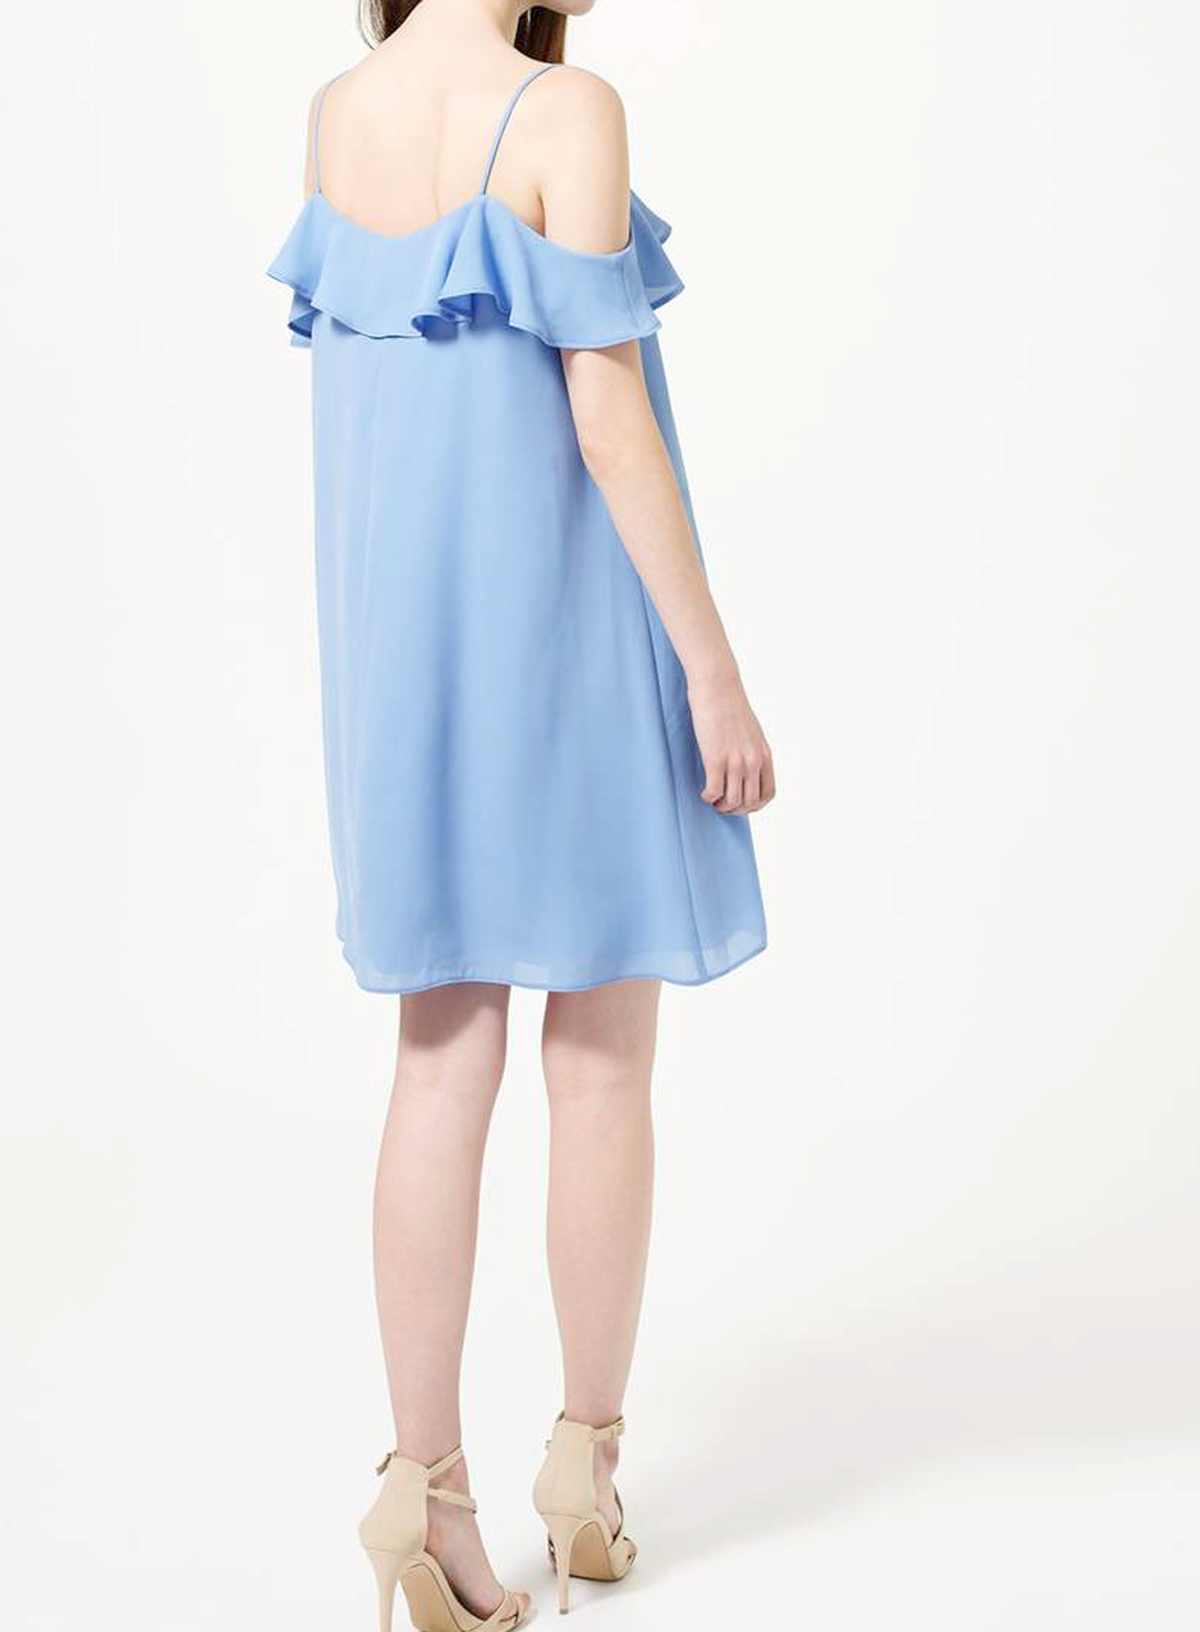 Miss Selfridge - - M1ss S3lfridge BLUE Cold Shoulder Frill Dress - Size ...